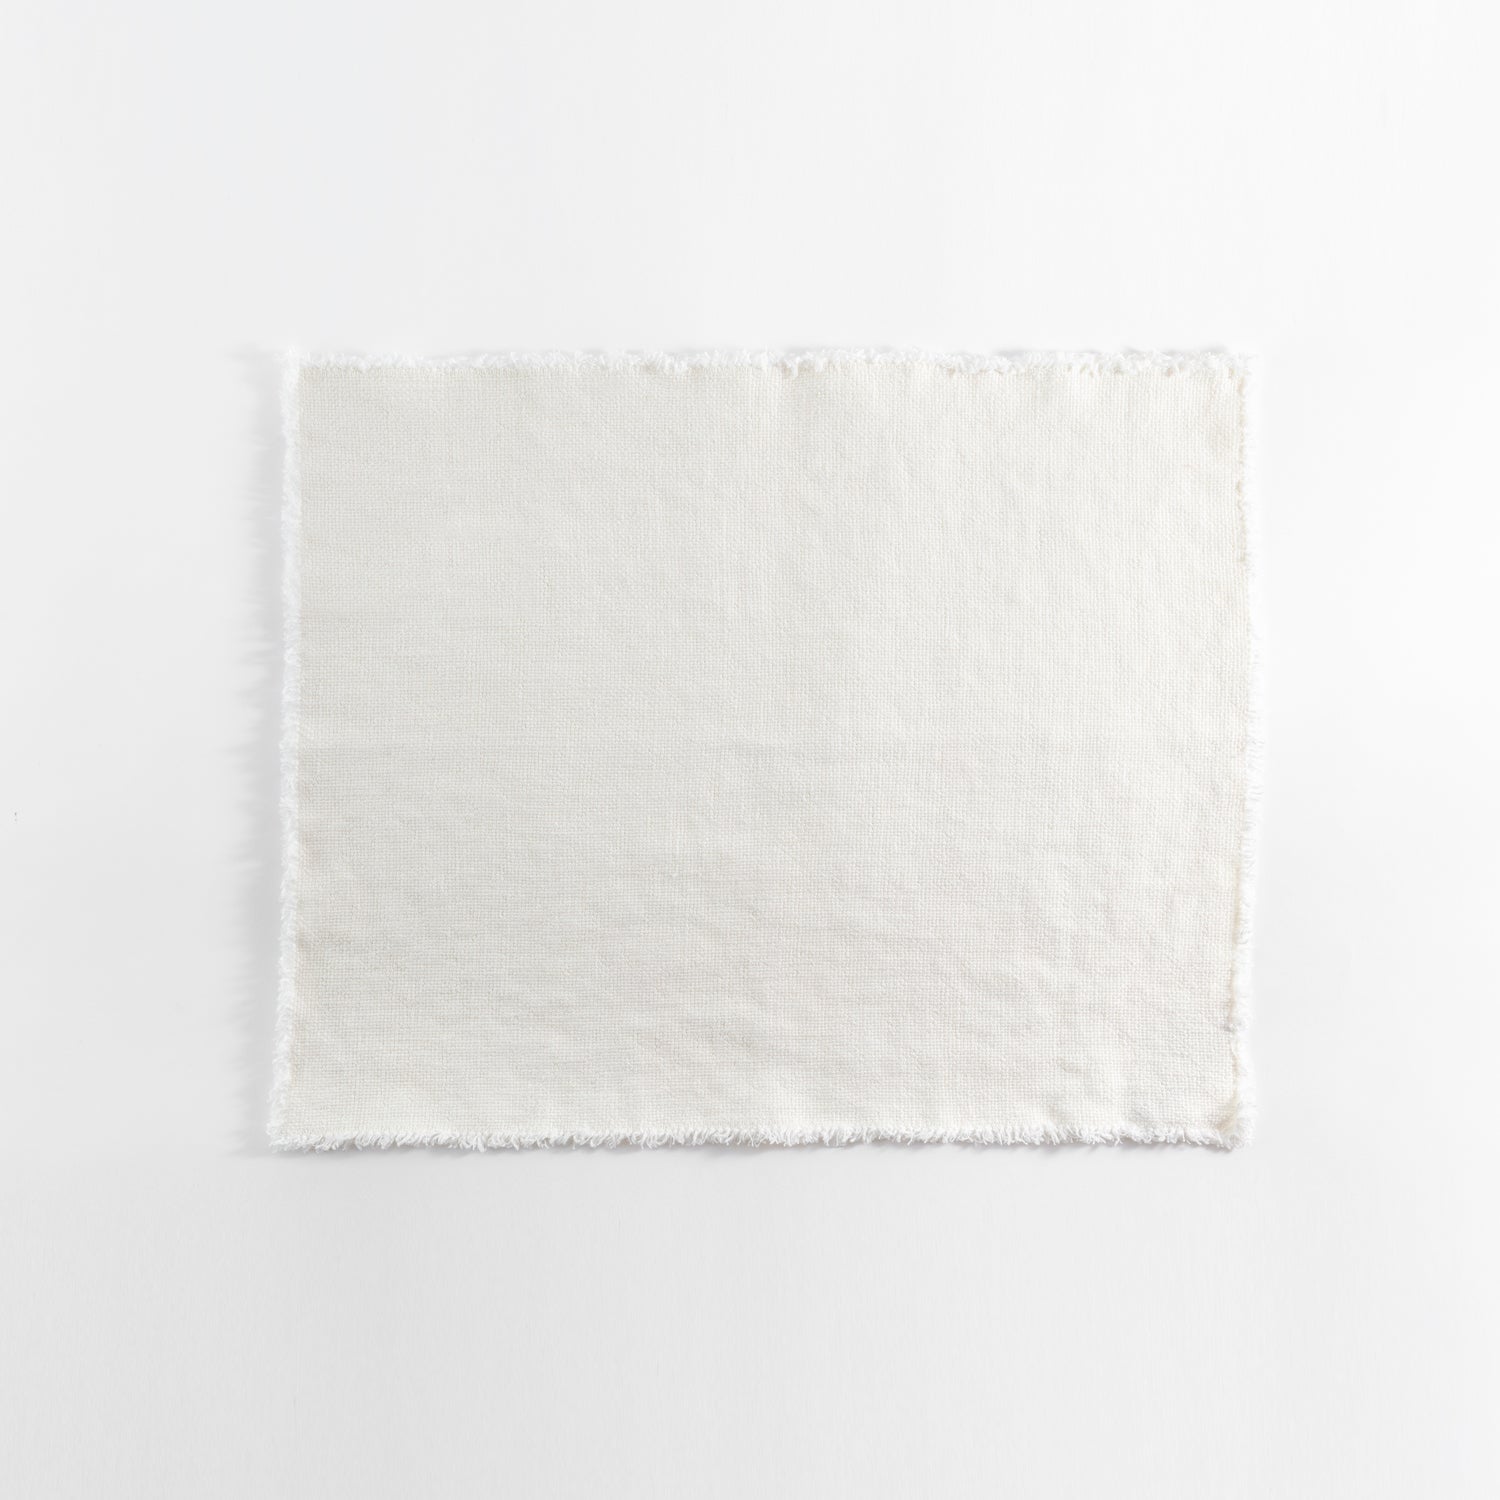 Plain undyed fabric with frayed edges on a white background.